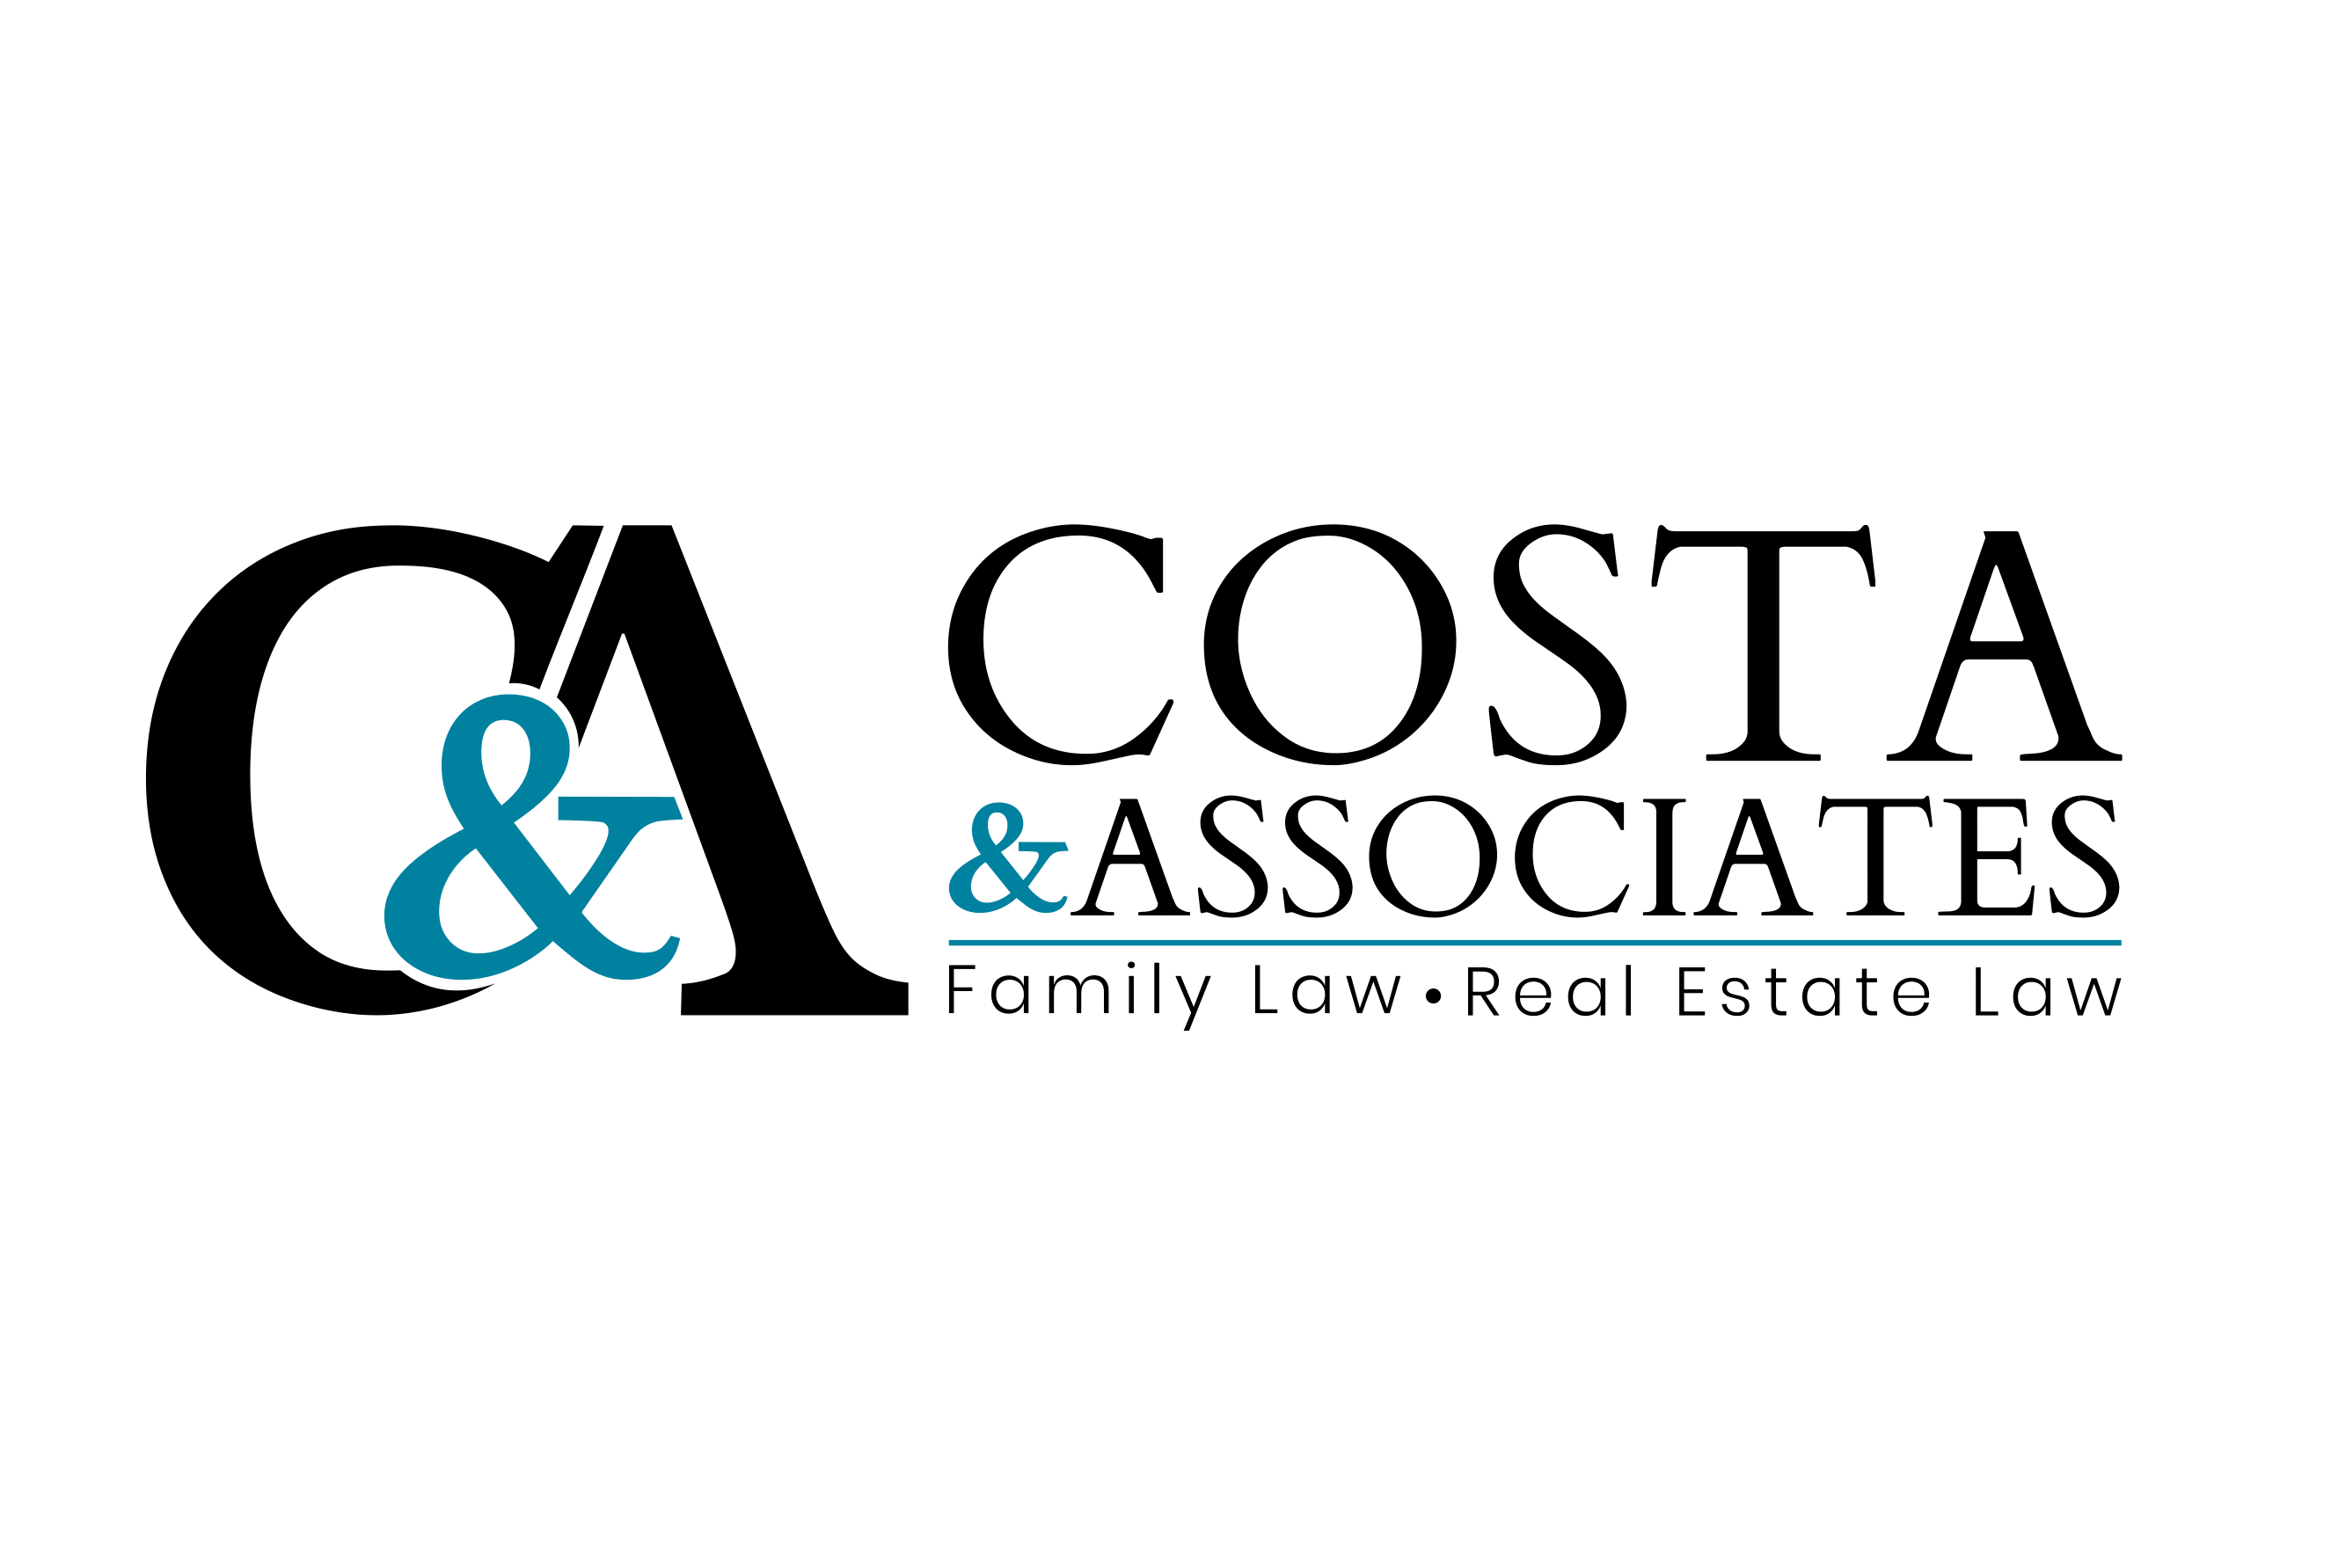 C&A_Costa_&_Associates_logo-1-min